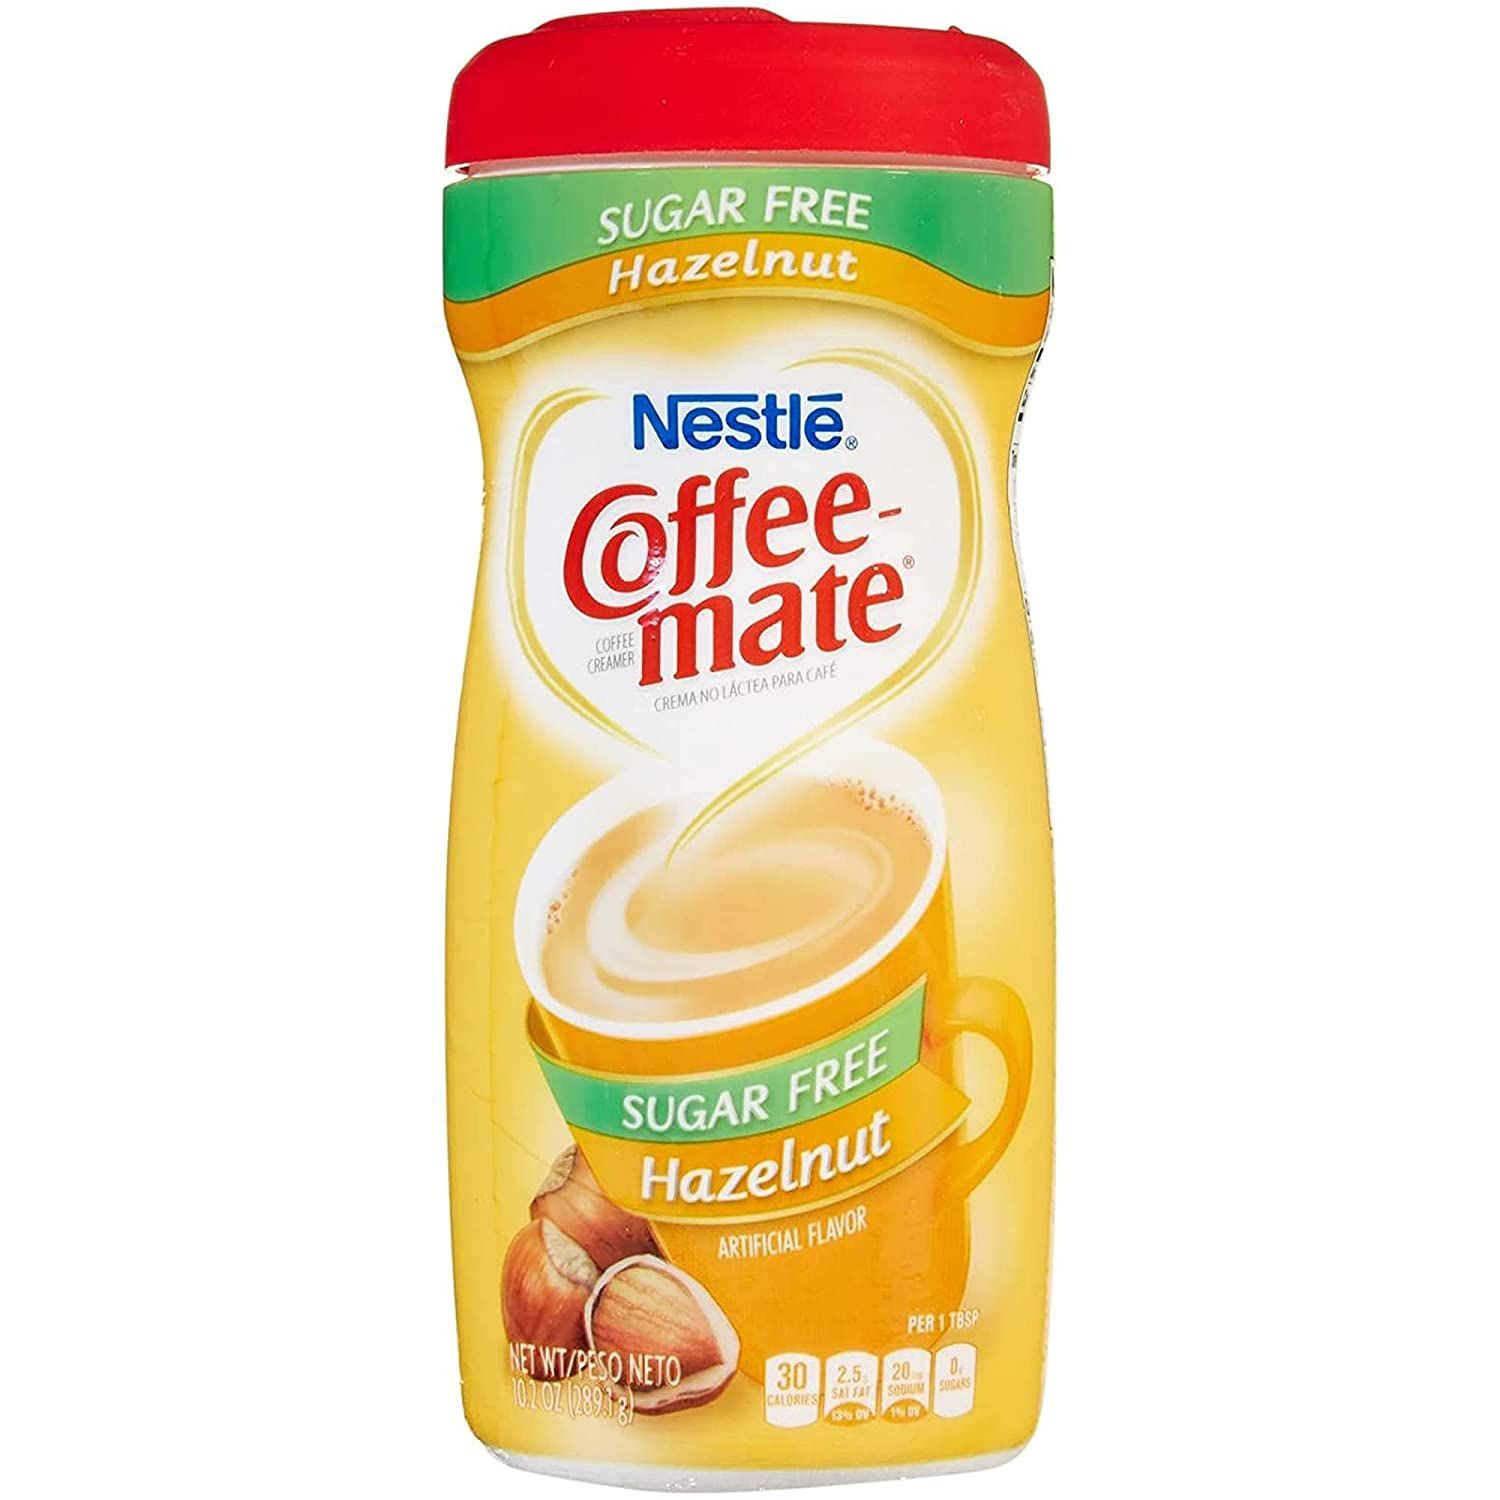 Nestle Sugar Free Hazelnut Coffee Mate Image